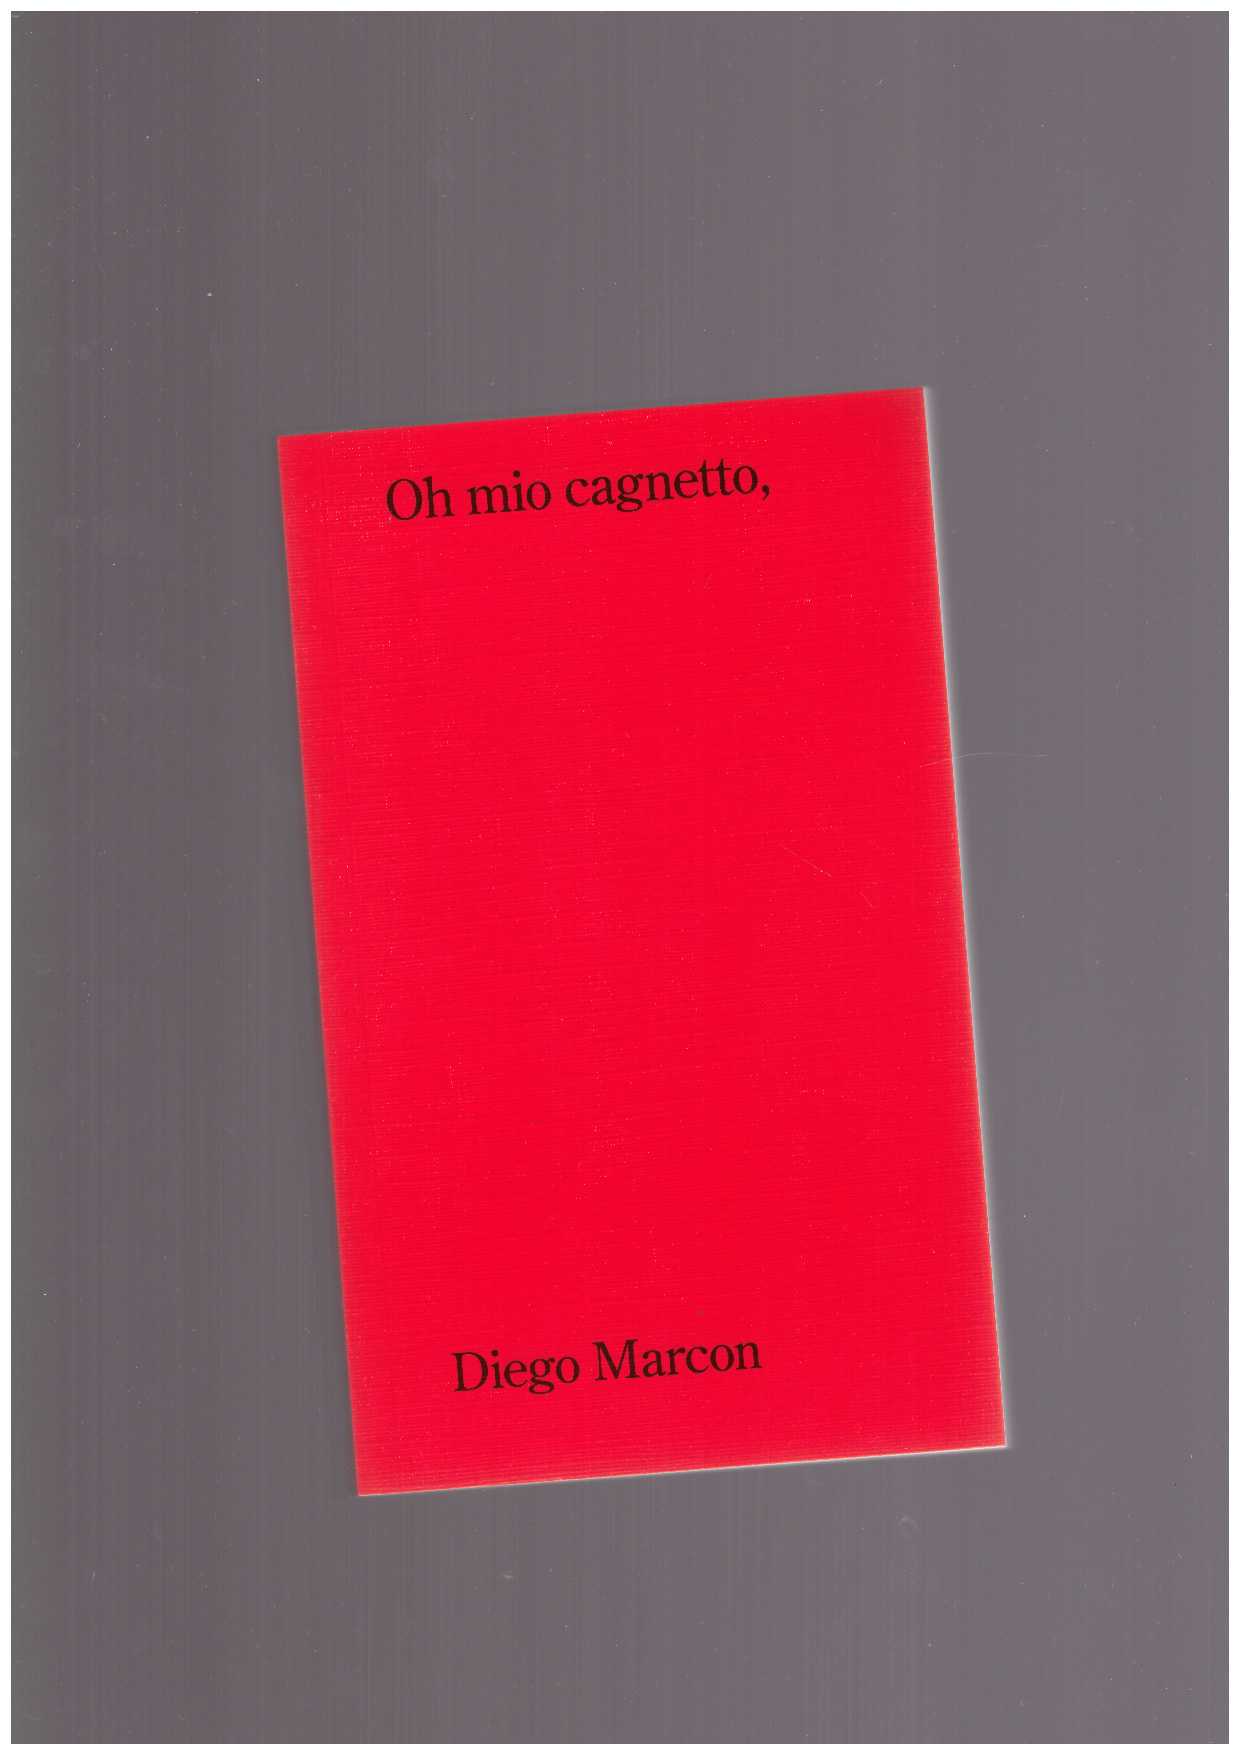 MARCON, Diego - Oh mio cagnetto,